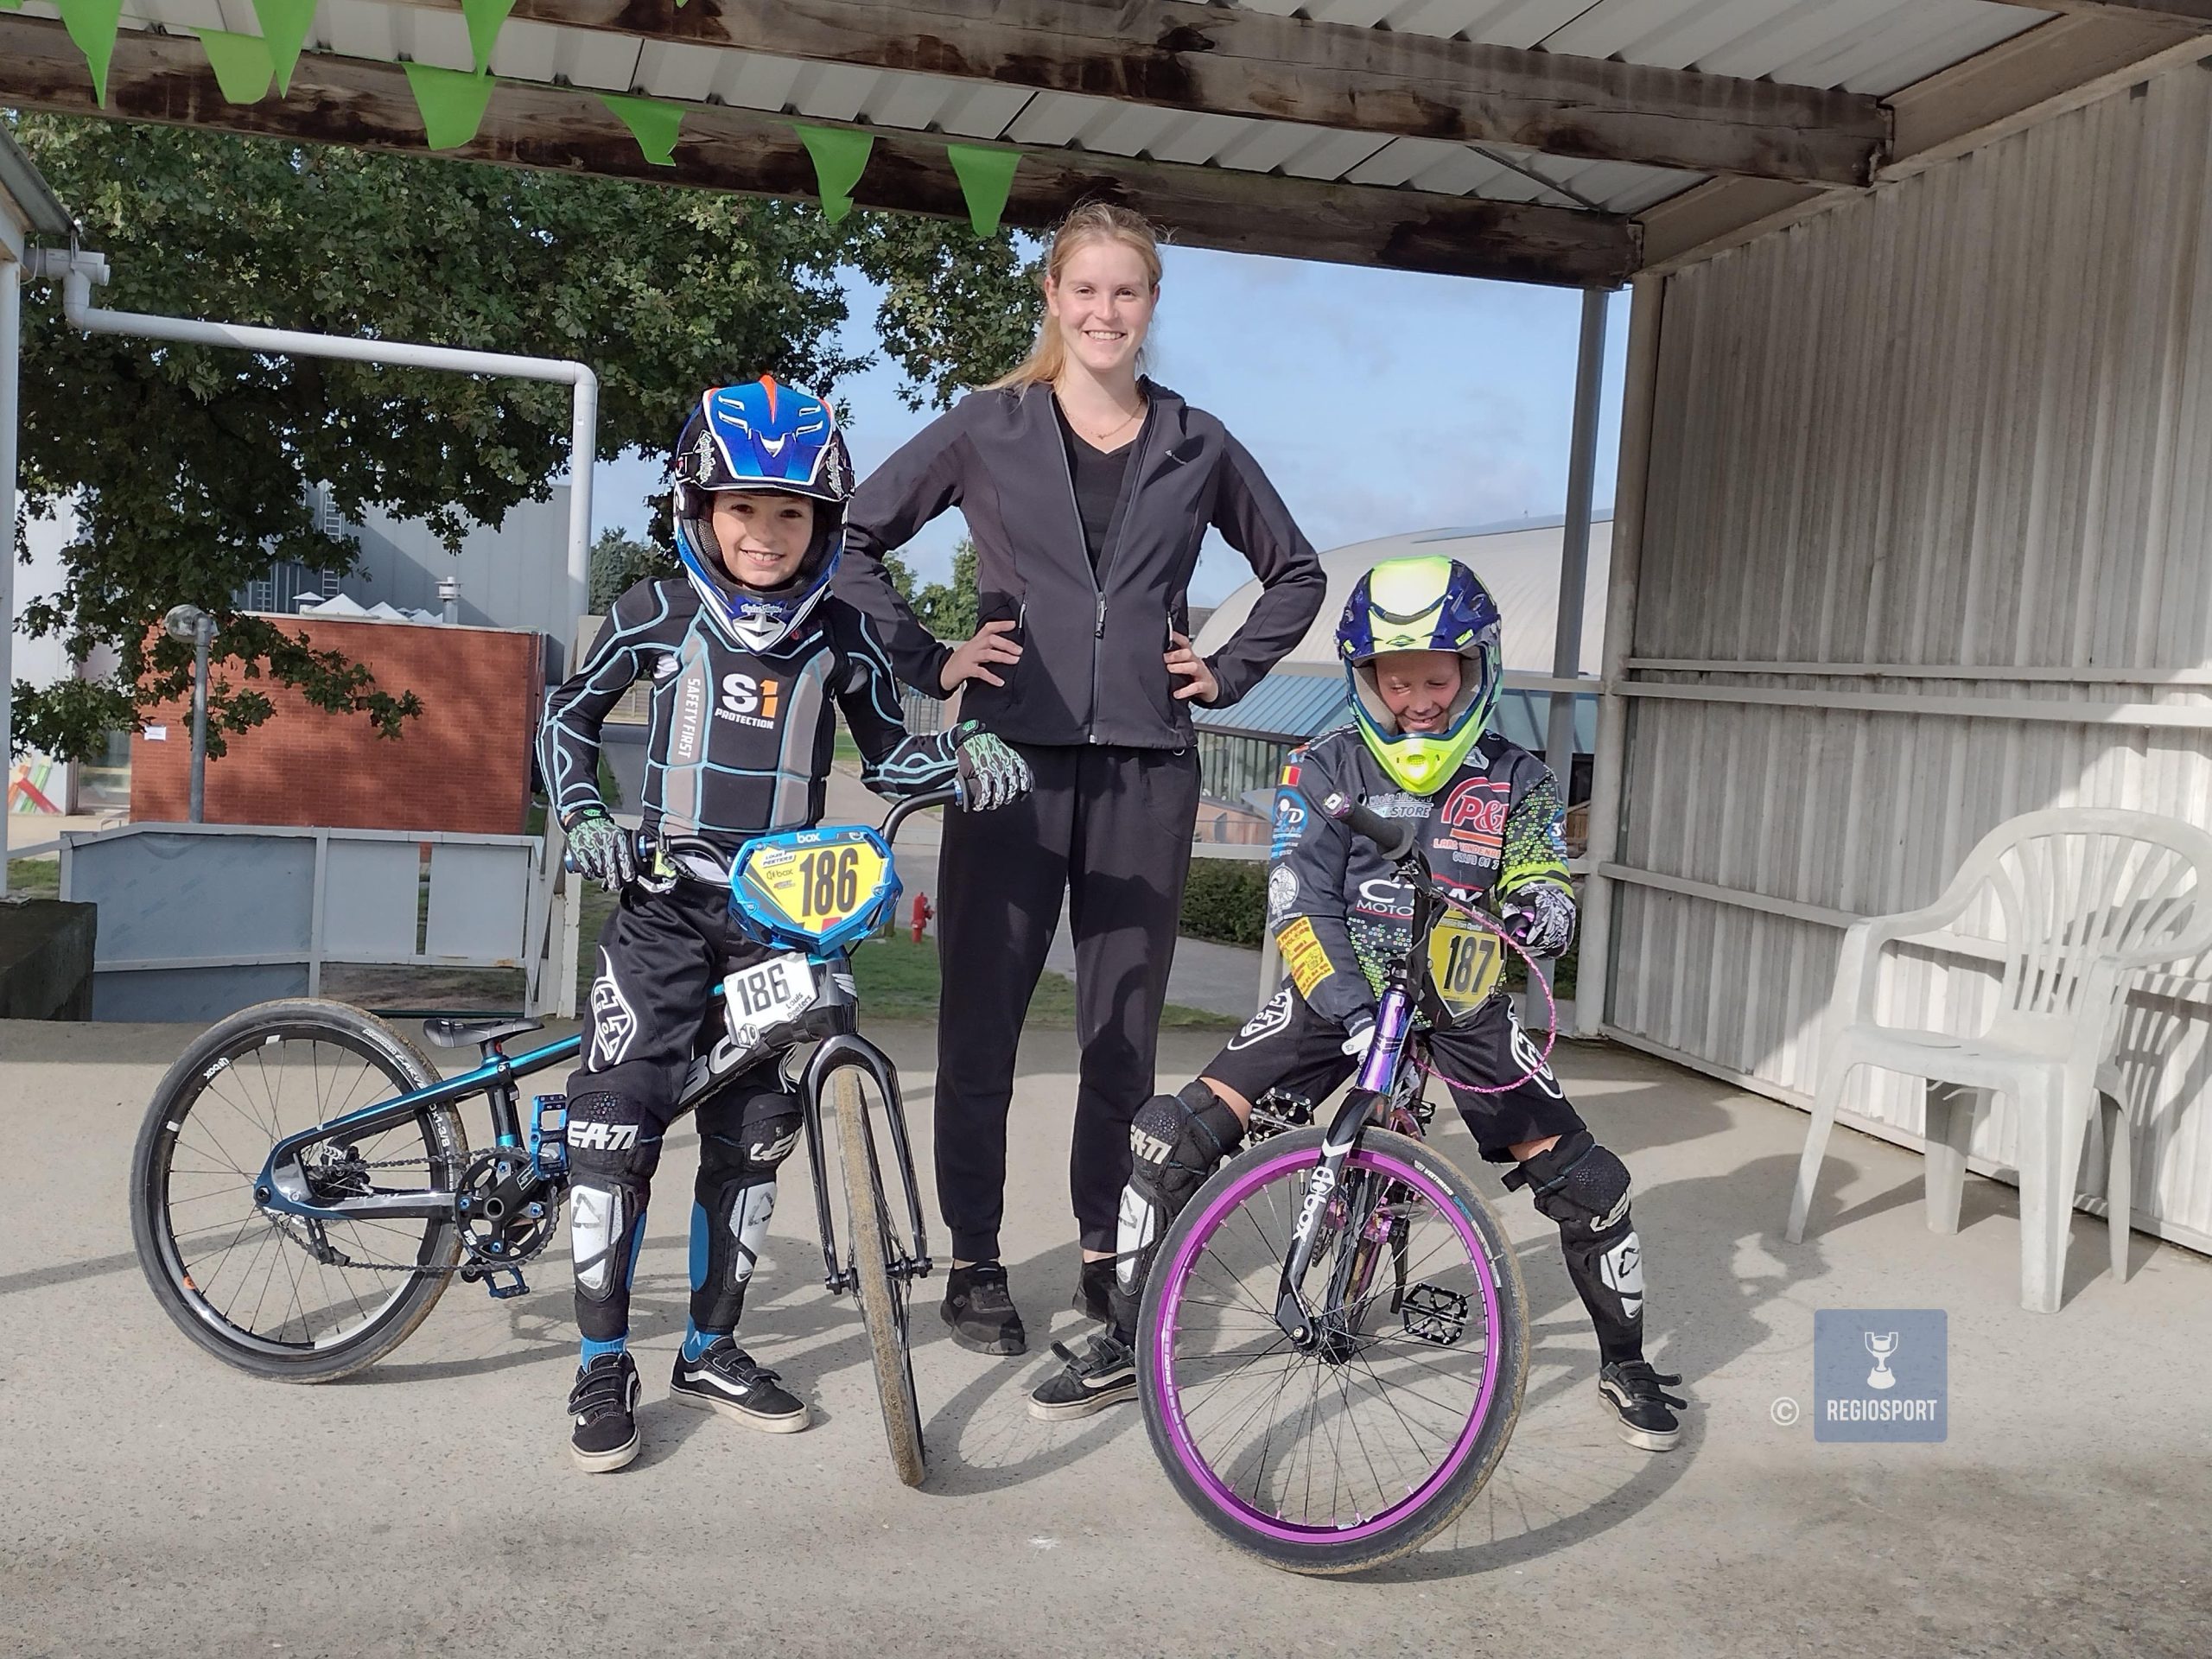 Itegemse BMX’ers Nisse en Louis leren van kampioene Jone